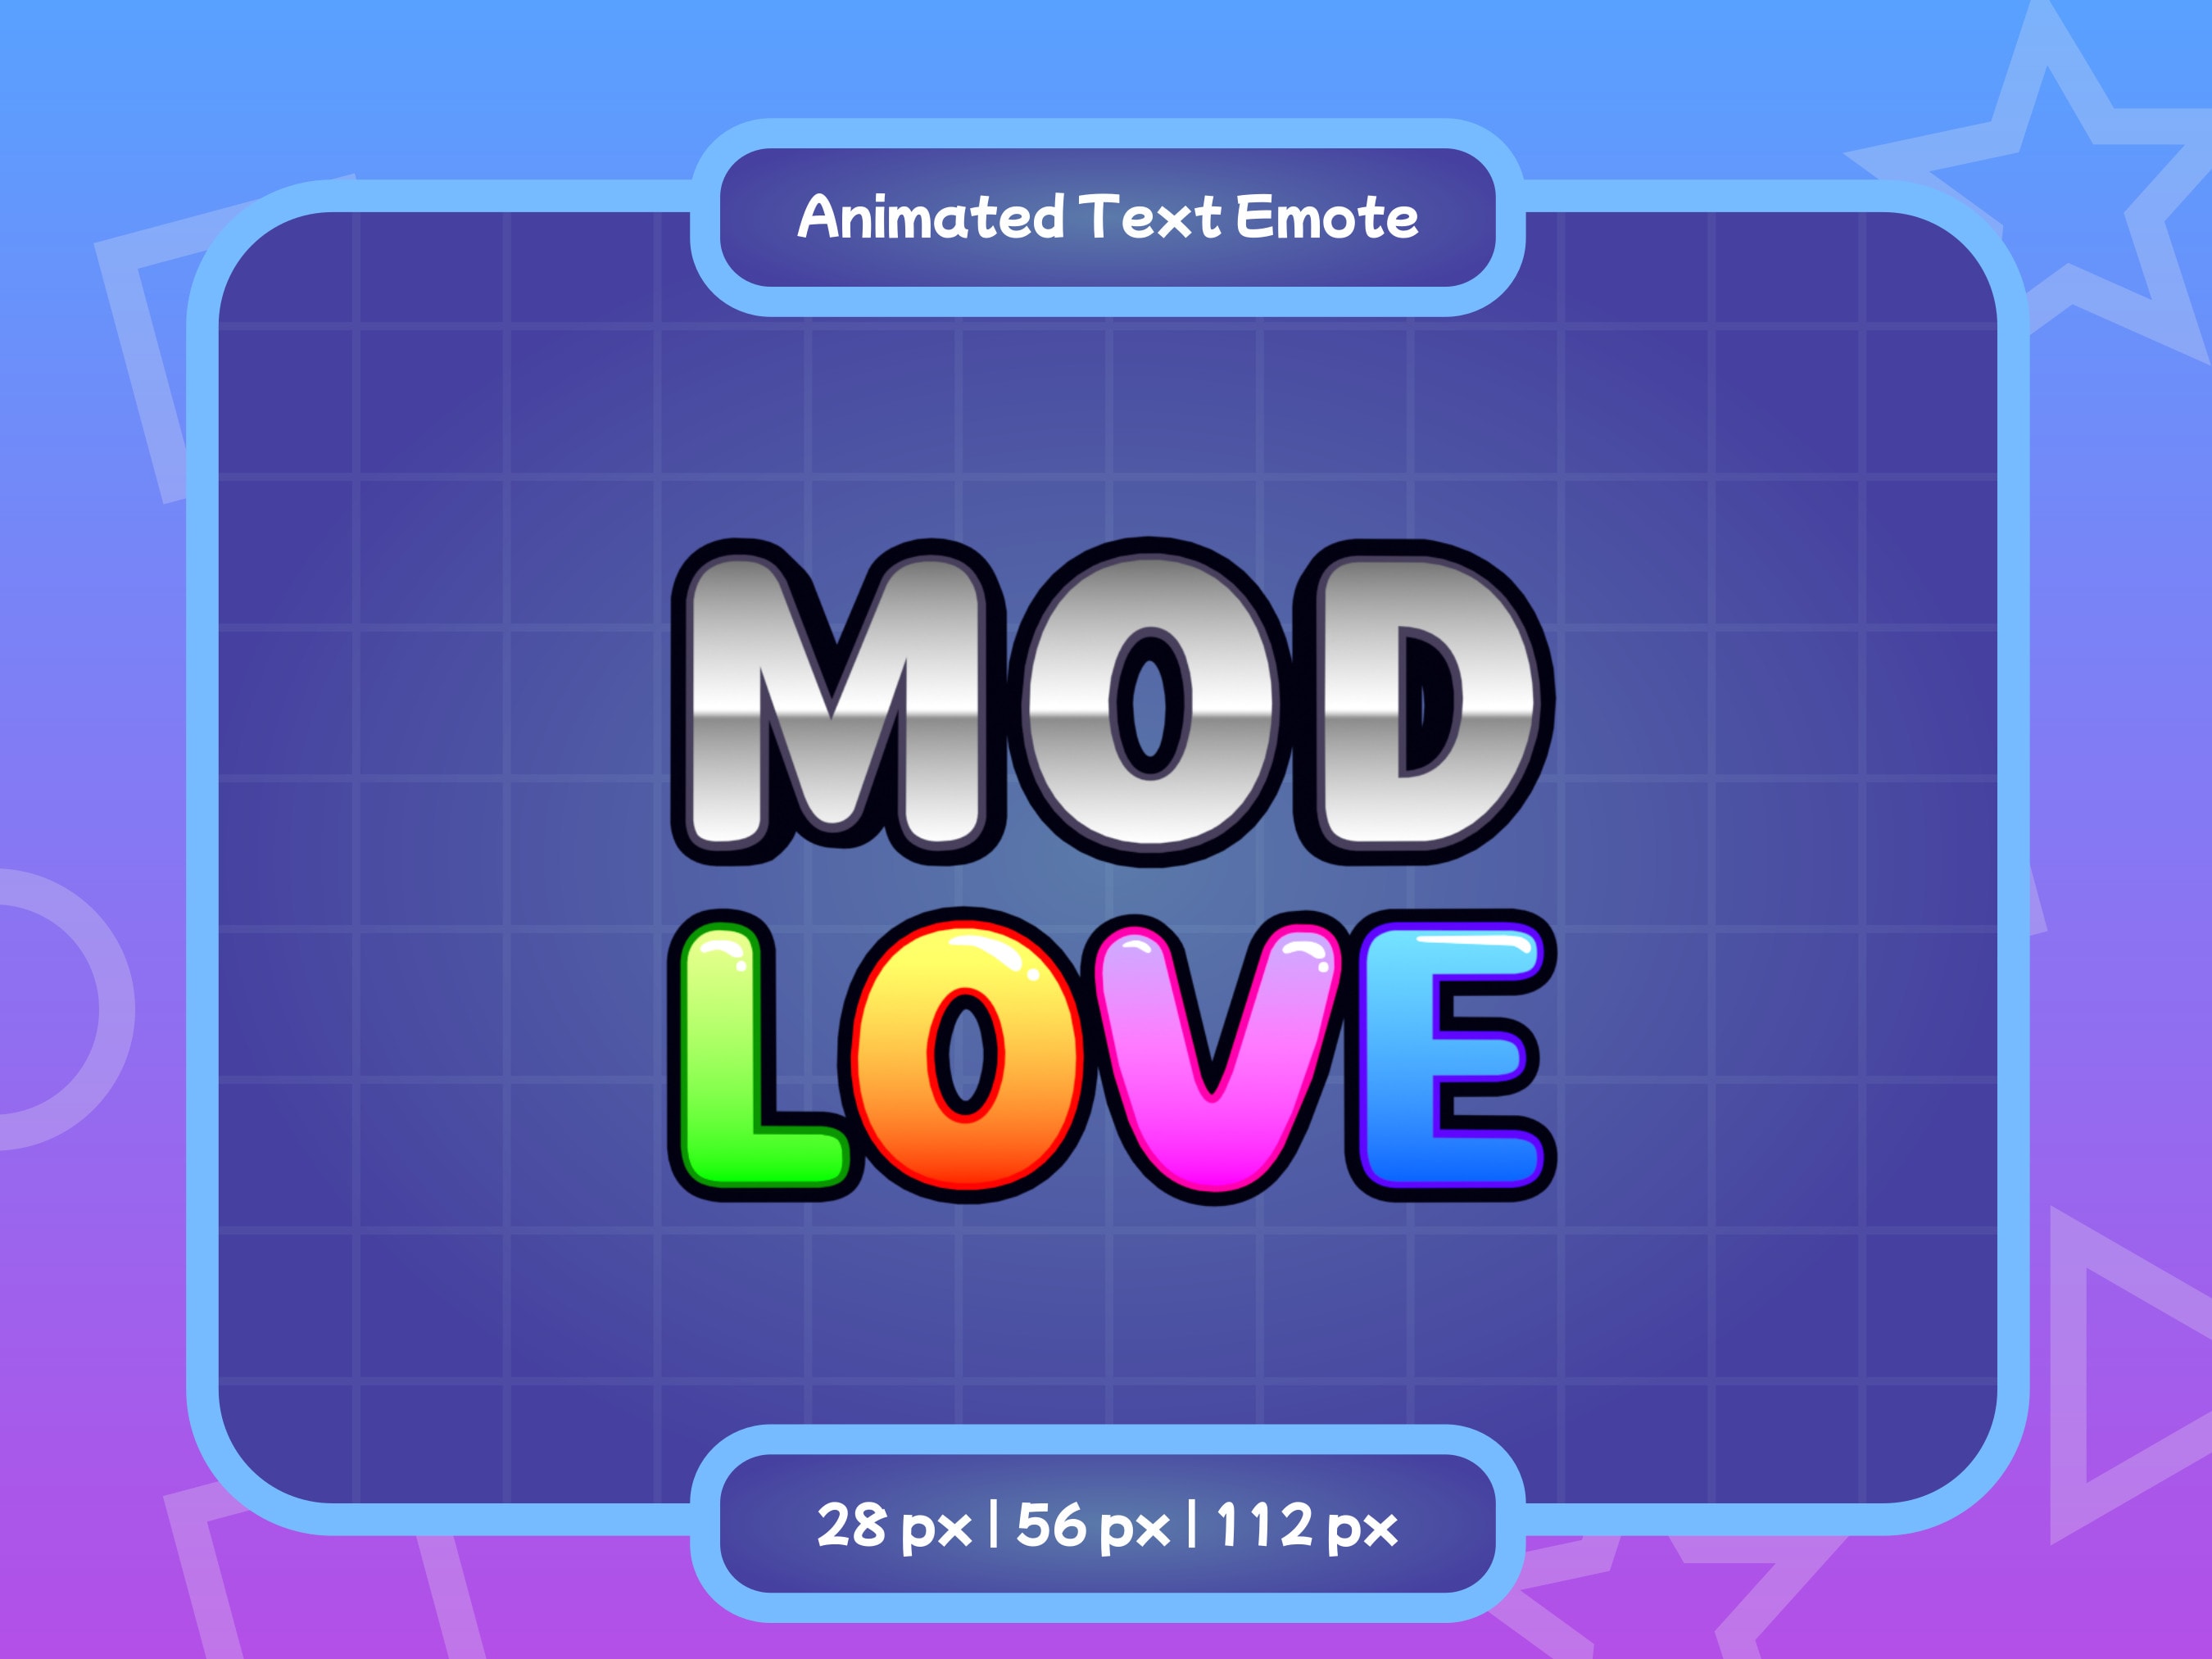 Bubble Mod Love Twitch Emote Mod Love Text Discord Emote -  Israel